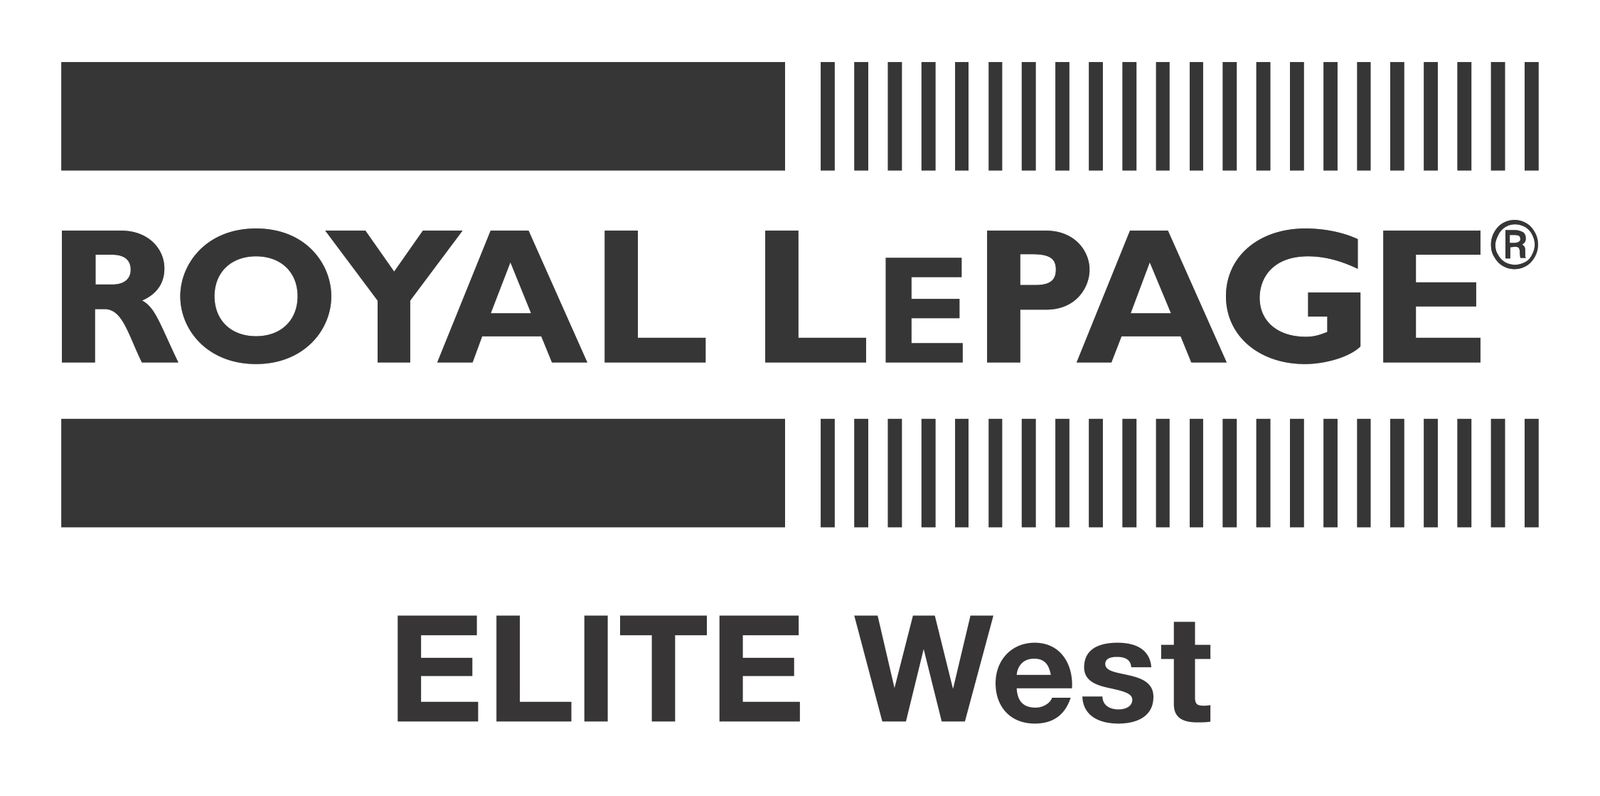 Royal LePage ELITE West Logo